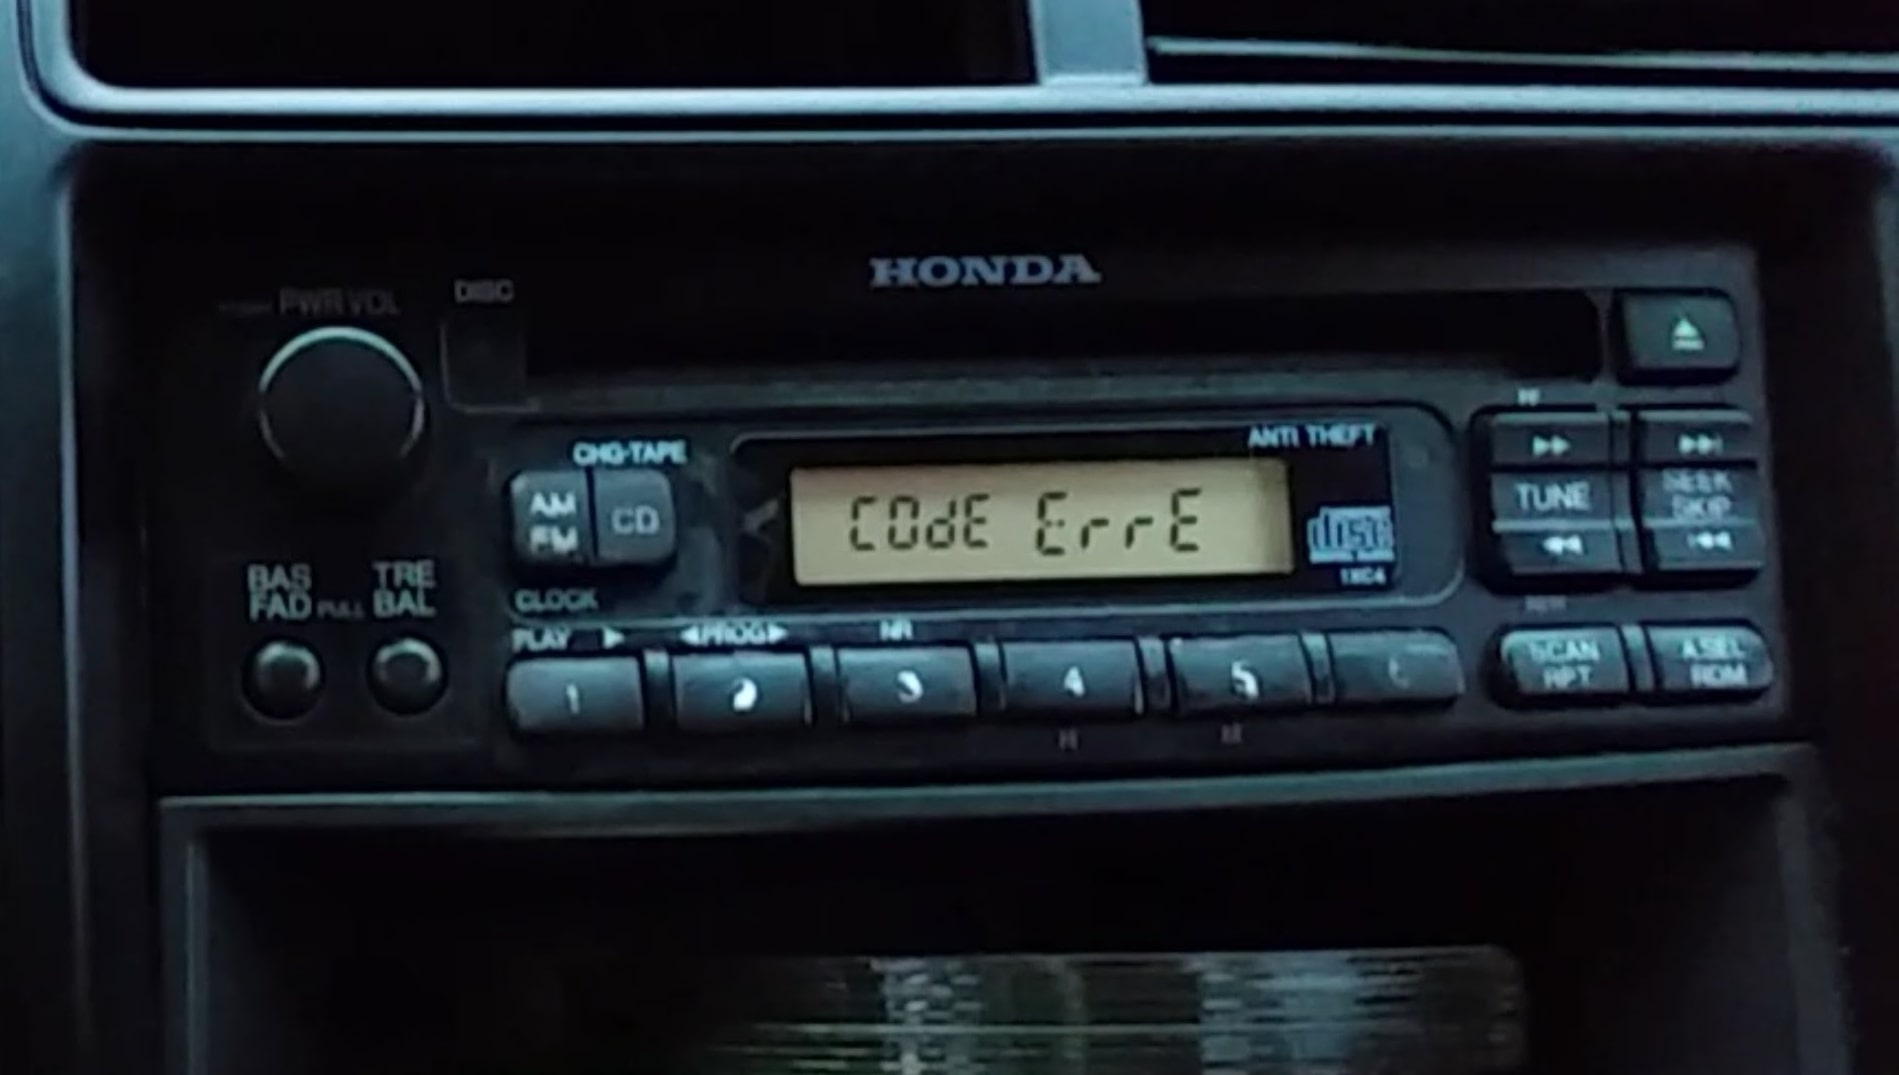 Honda Radio Code Error